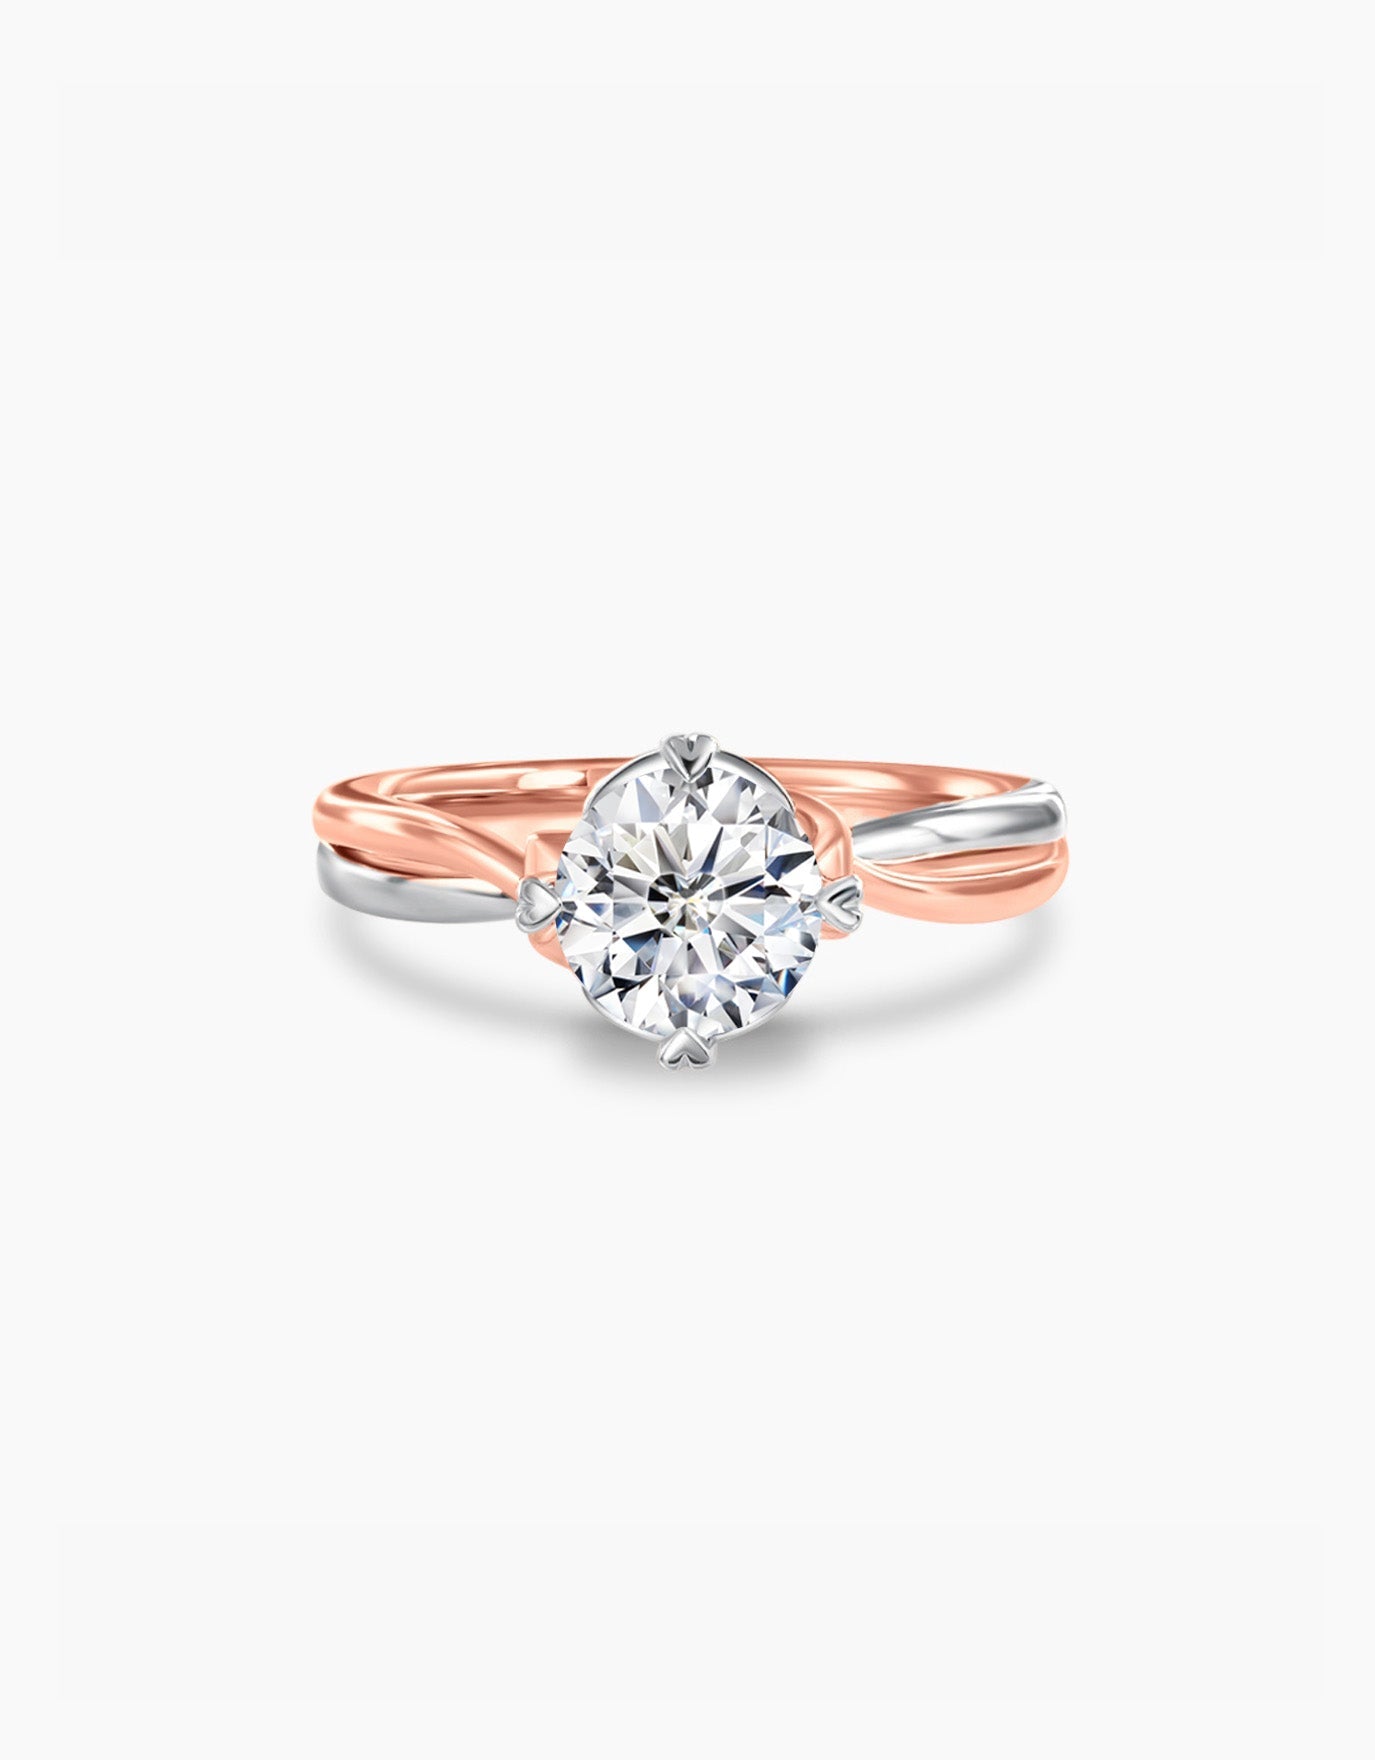 LVC Say Love™ Destiny Esme Diamond Ring - 1.0ct